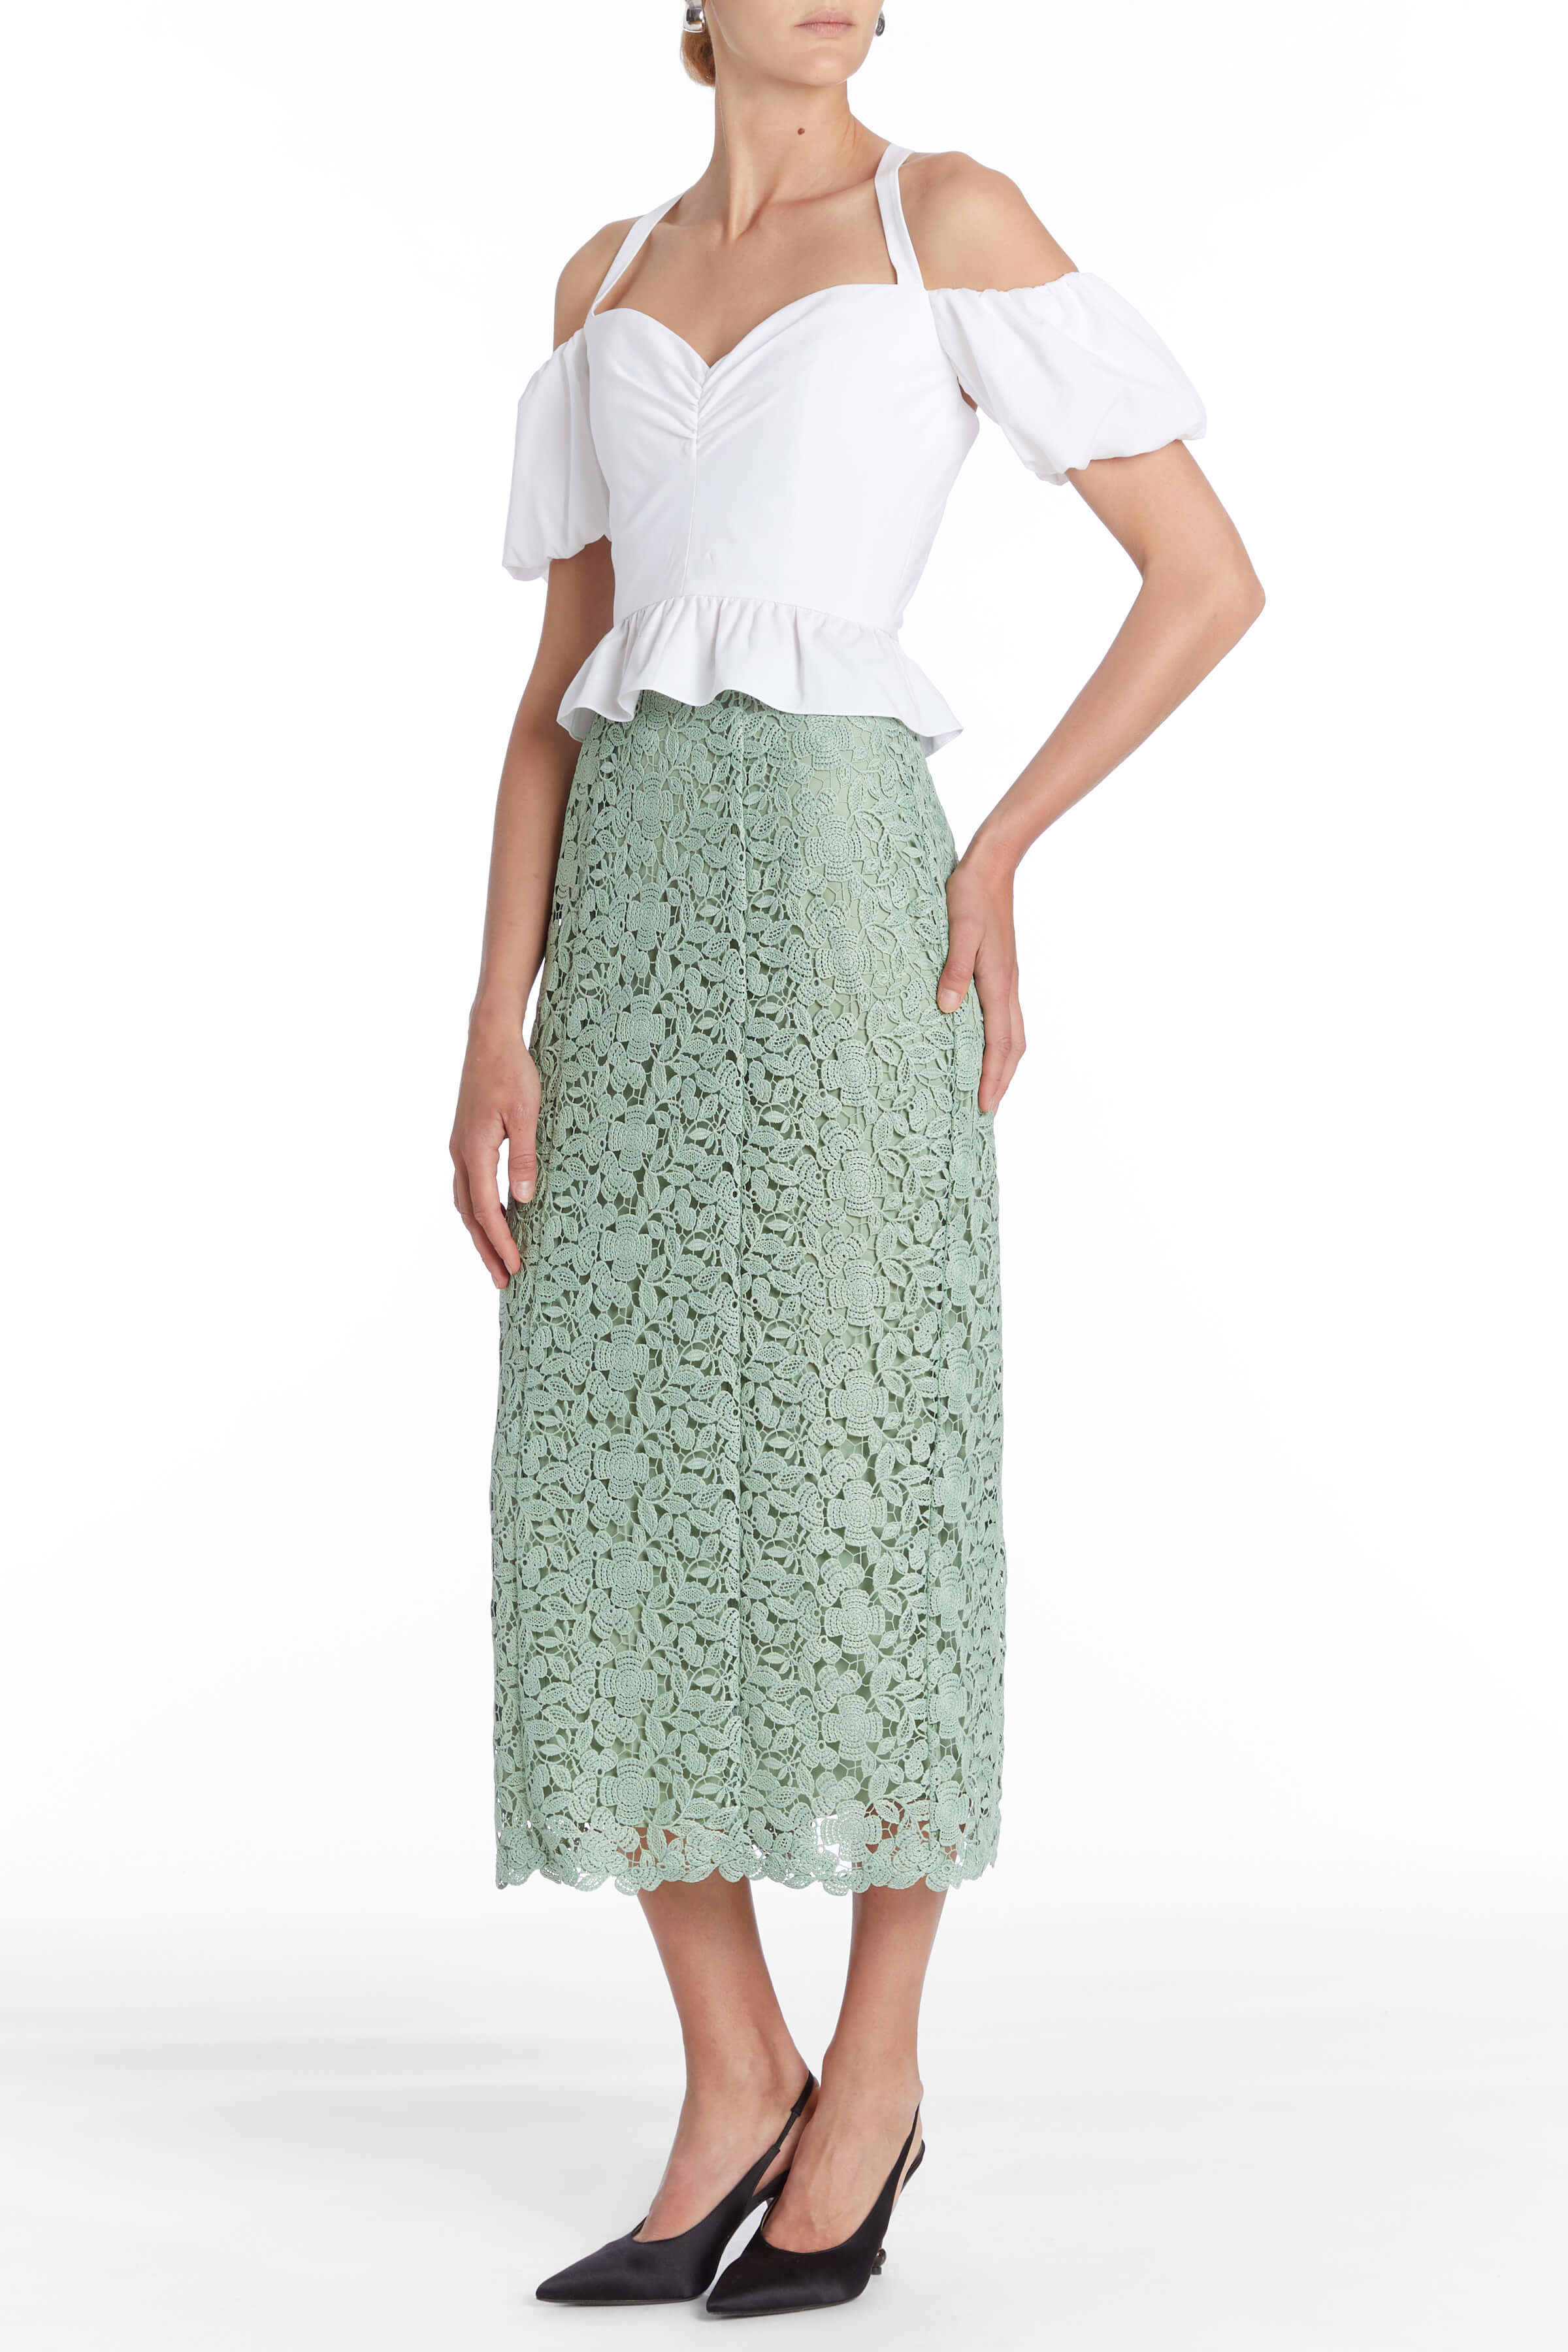 Tammy Green Crochet Lace Skirt With Back Slit